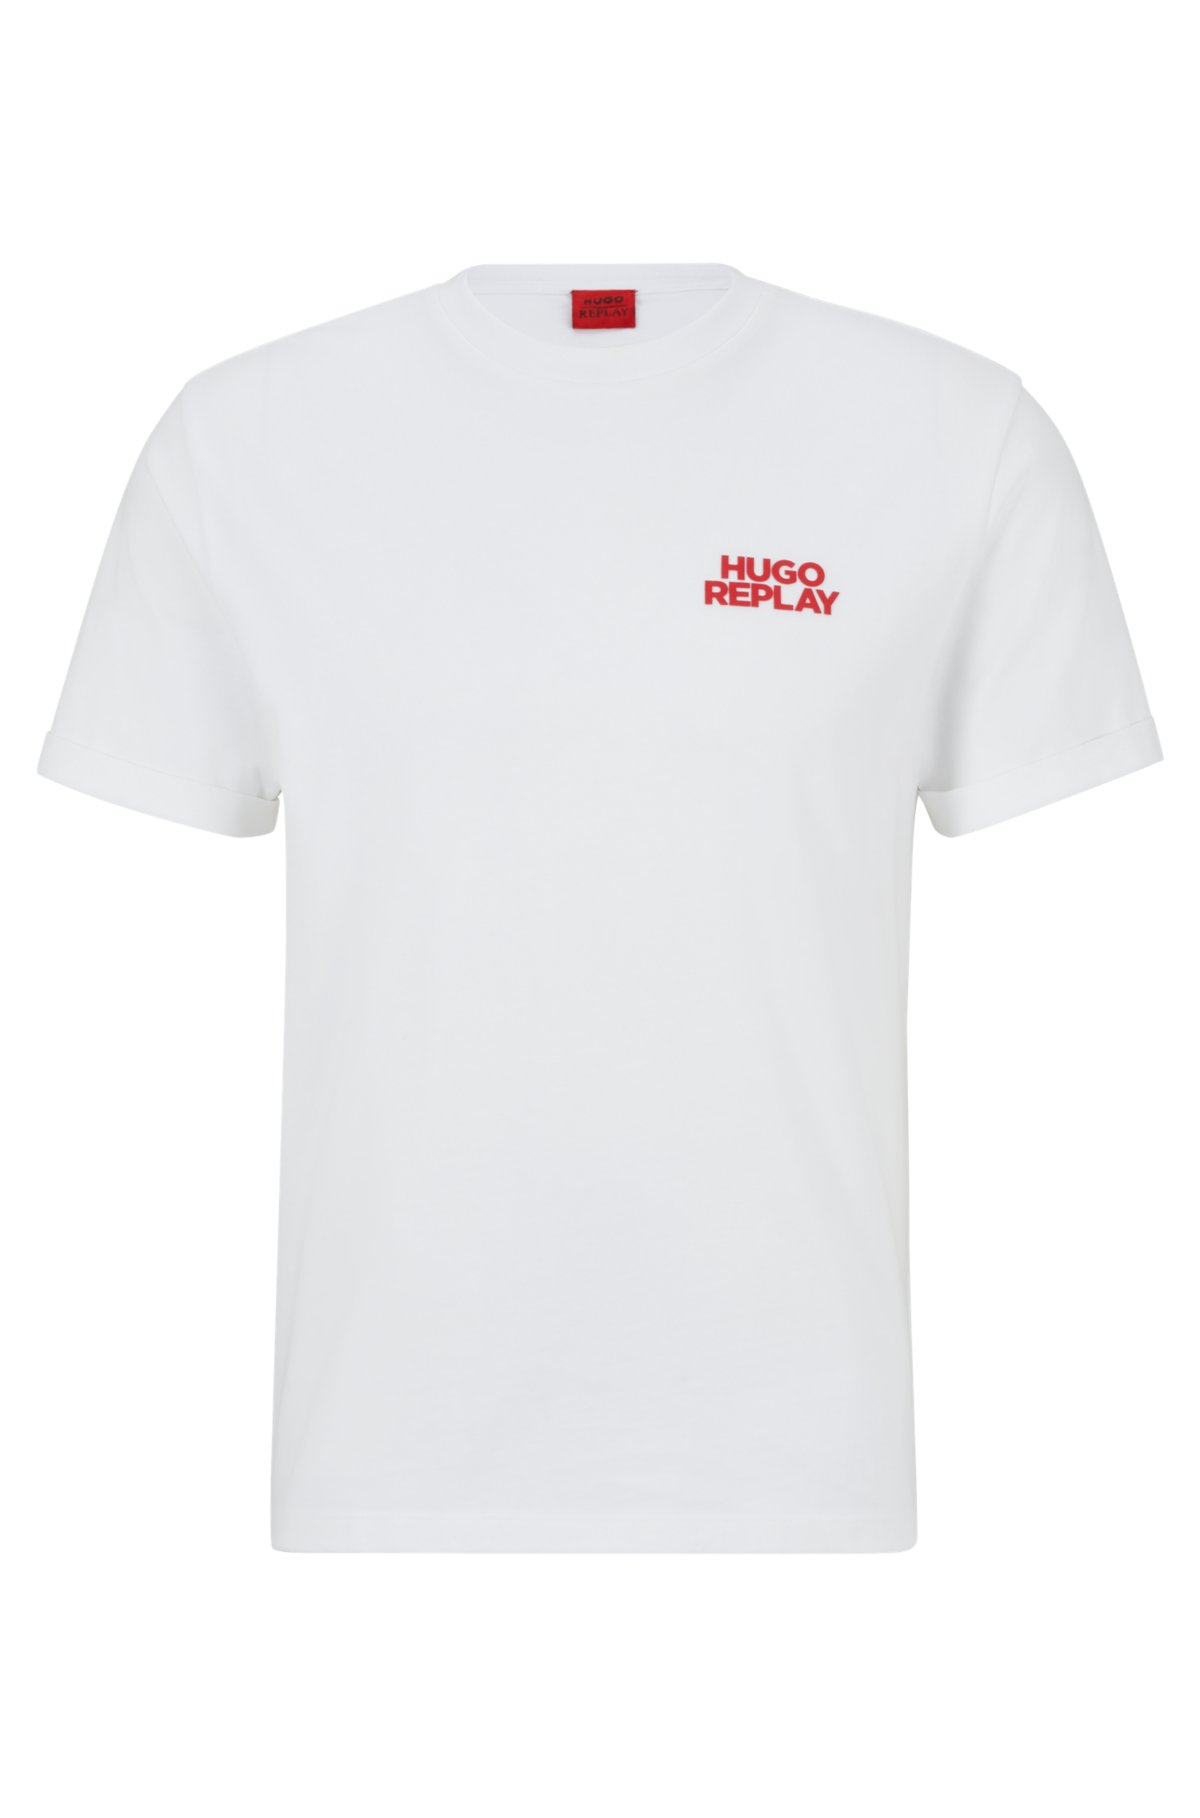 - | REPLAY cotton logo HUGO HUGO print T-shirt capsule with